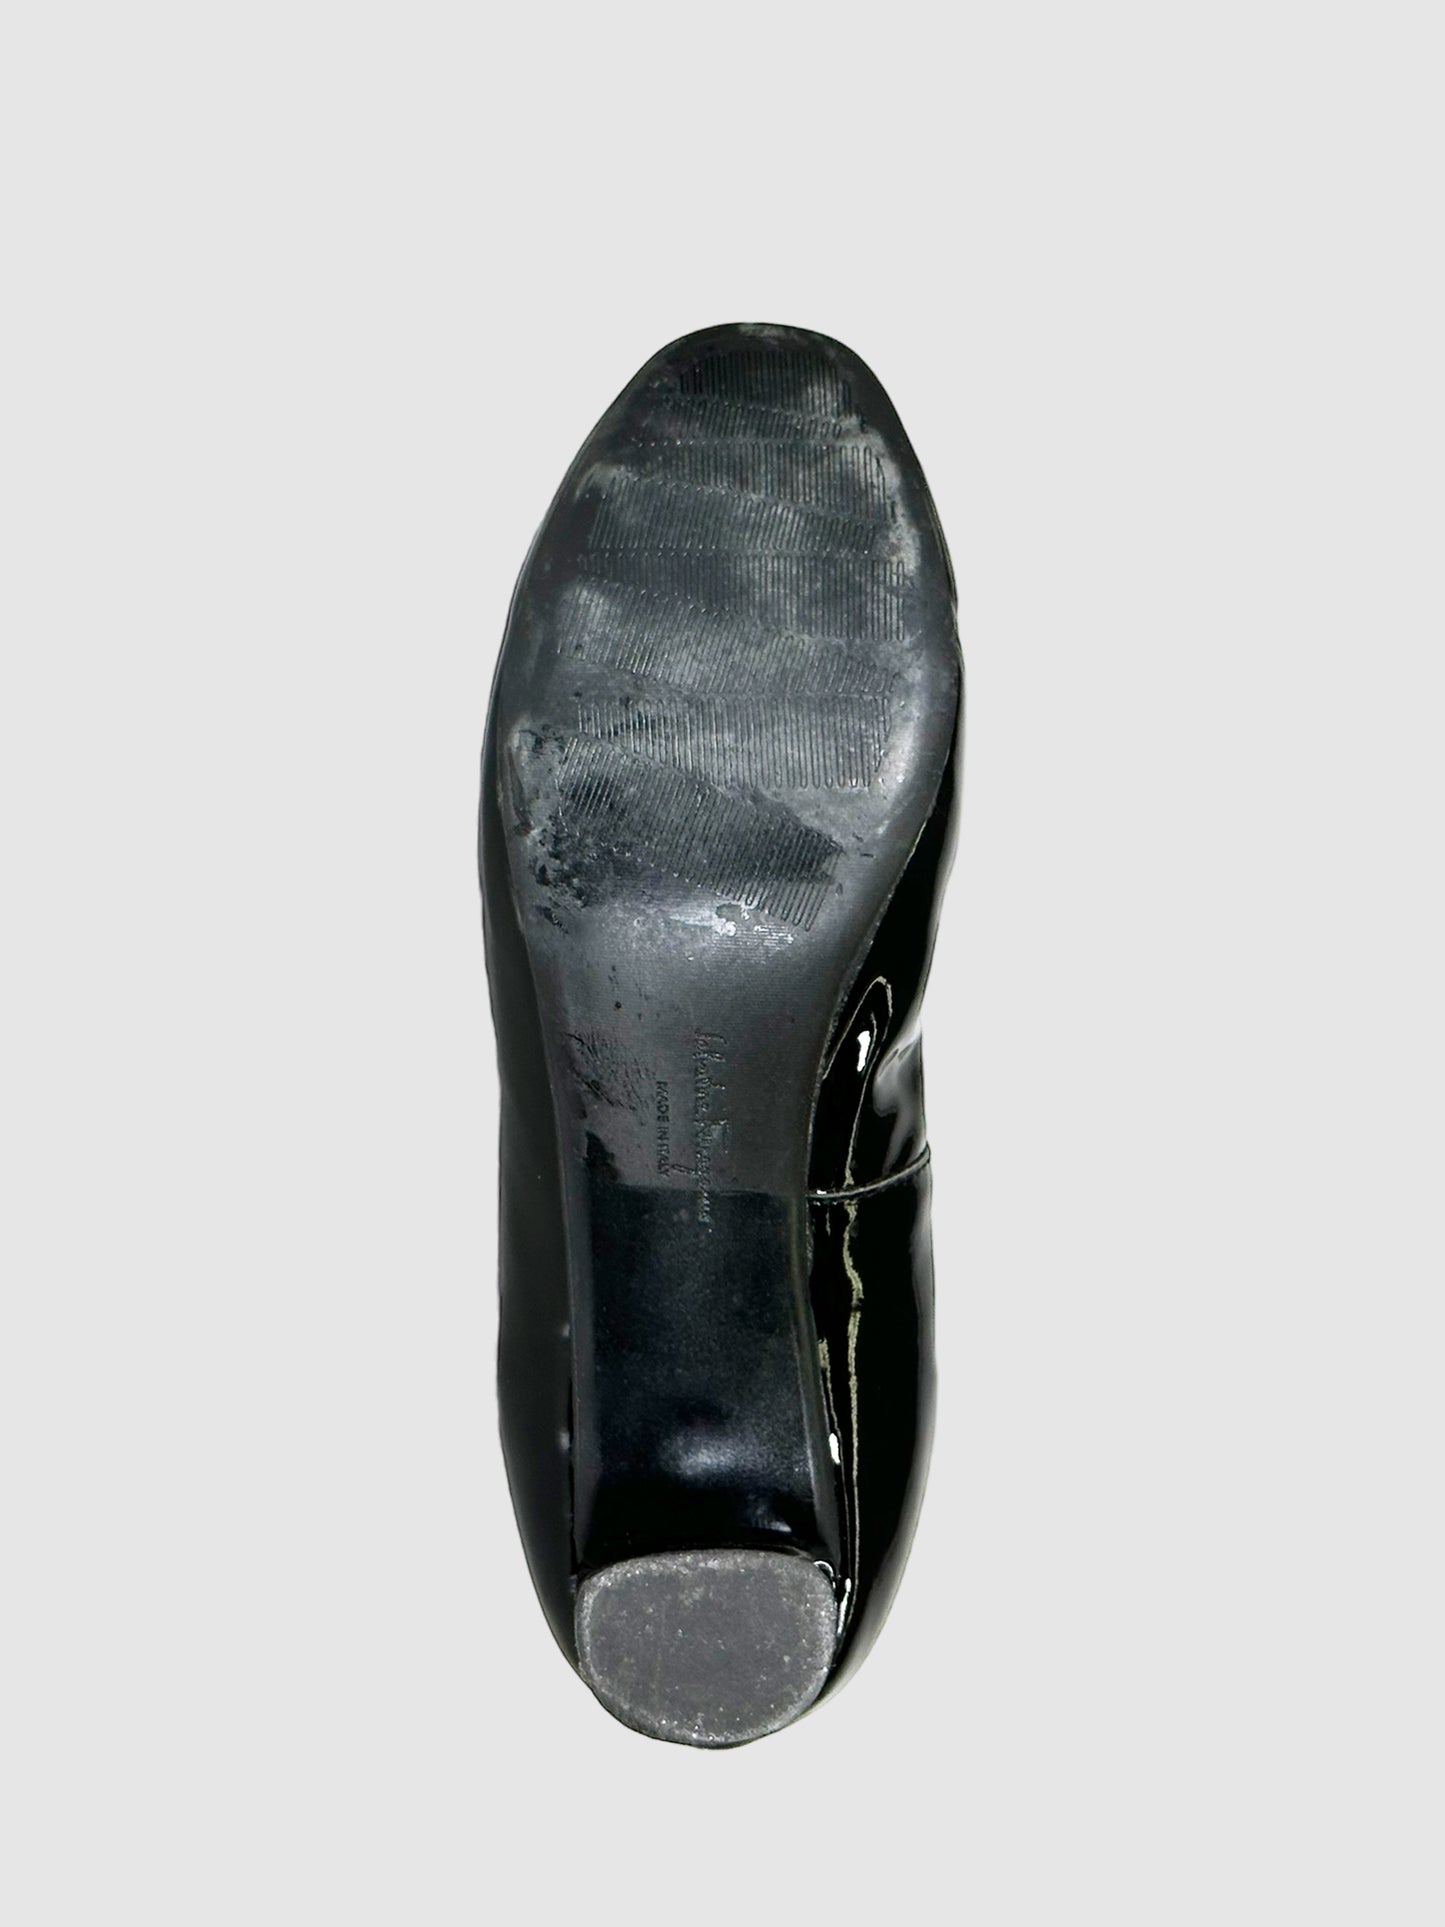 Salvatore Ferragamo Leather Bow Accents Pumps - Size 10